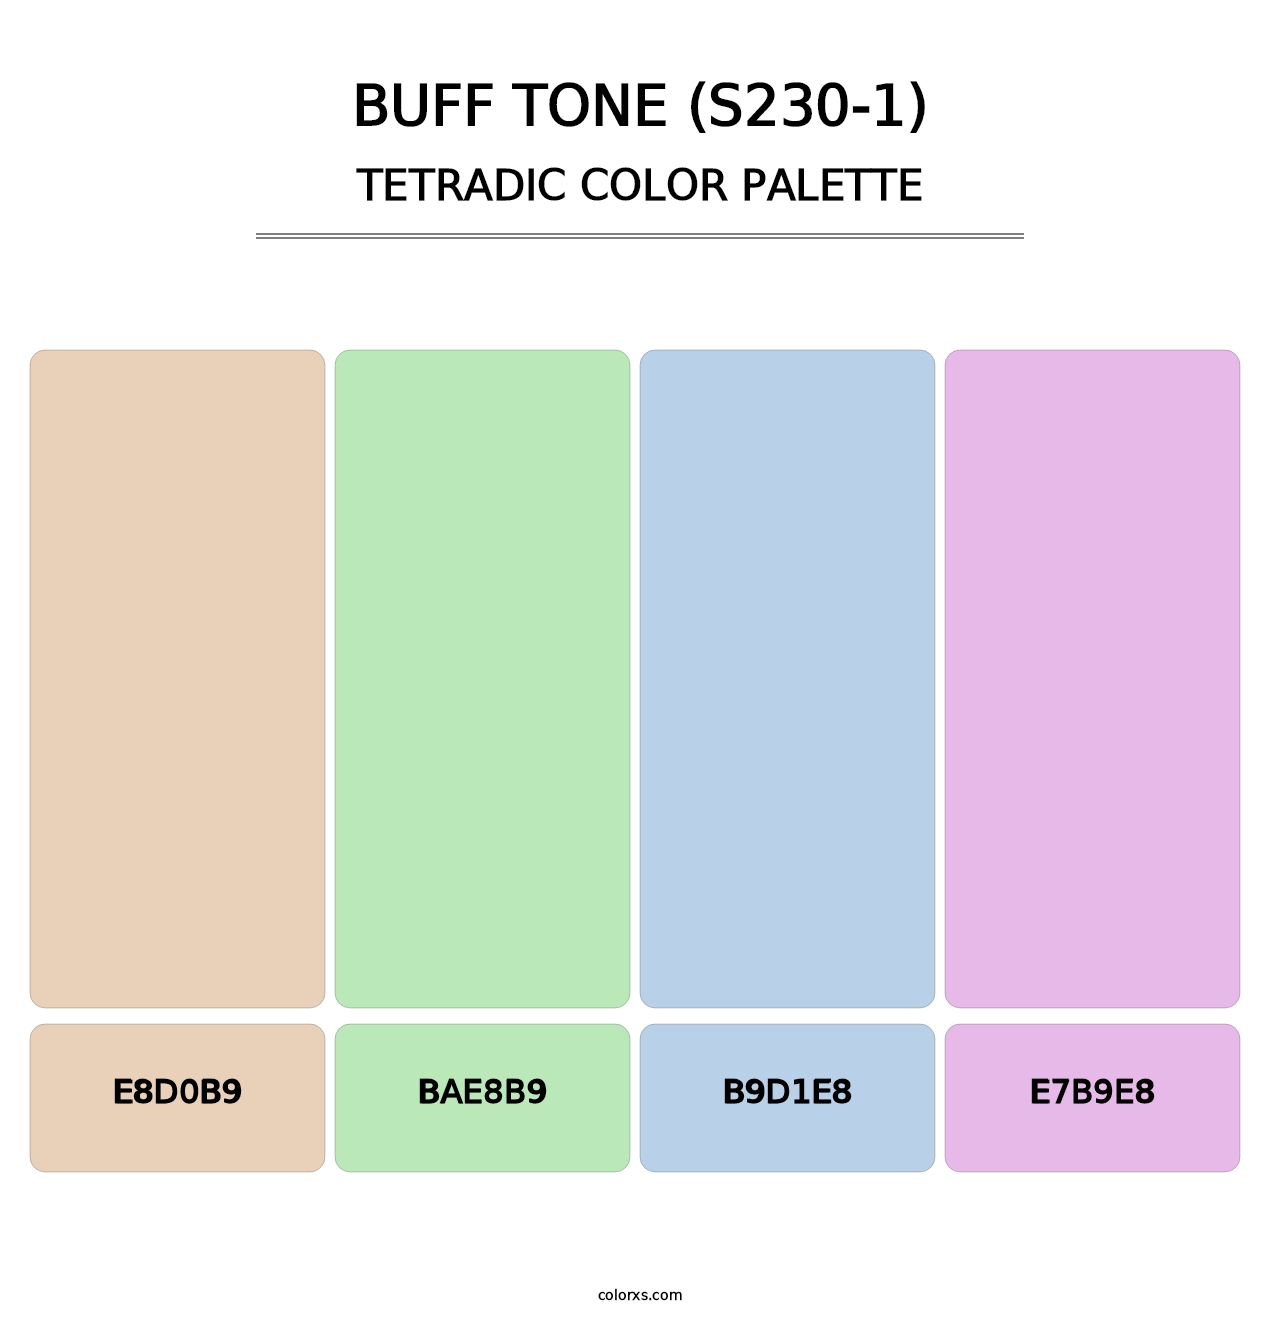 Buff Tone (S230-1) - Tetradic Color Palette